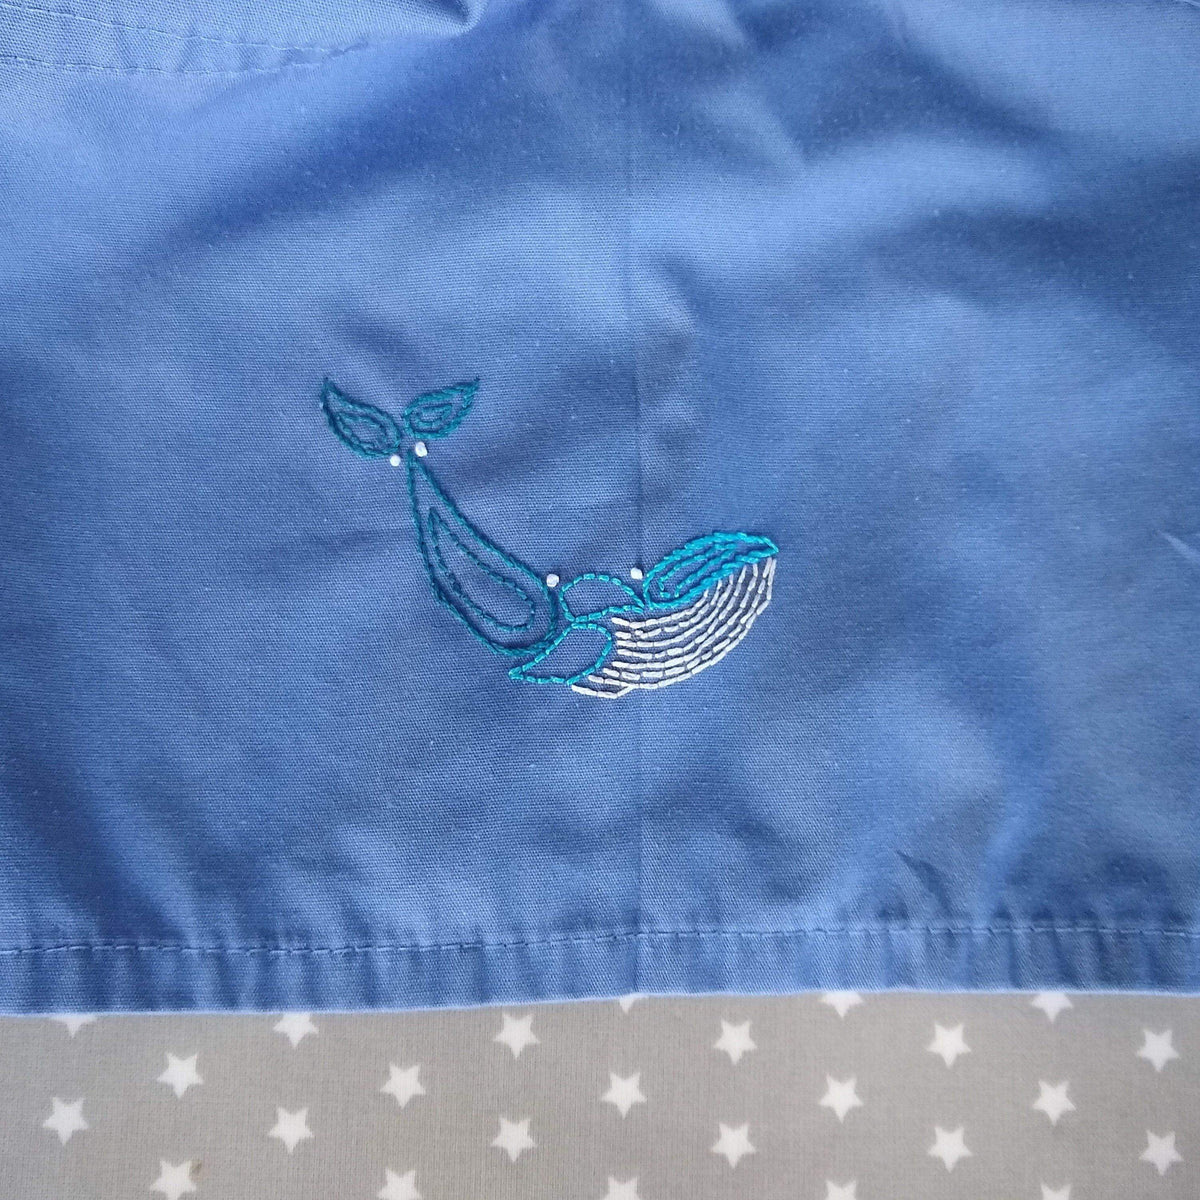 Paraffle Embroidery Ocean Customise Kit